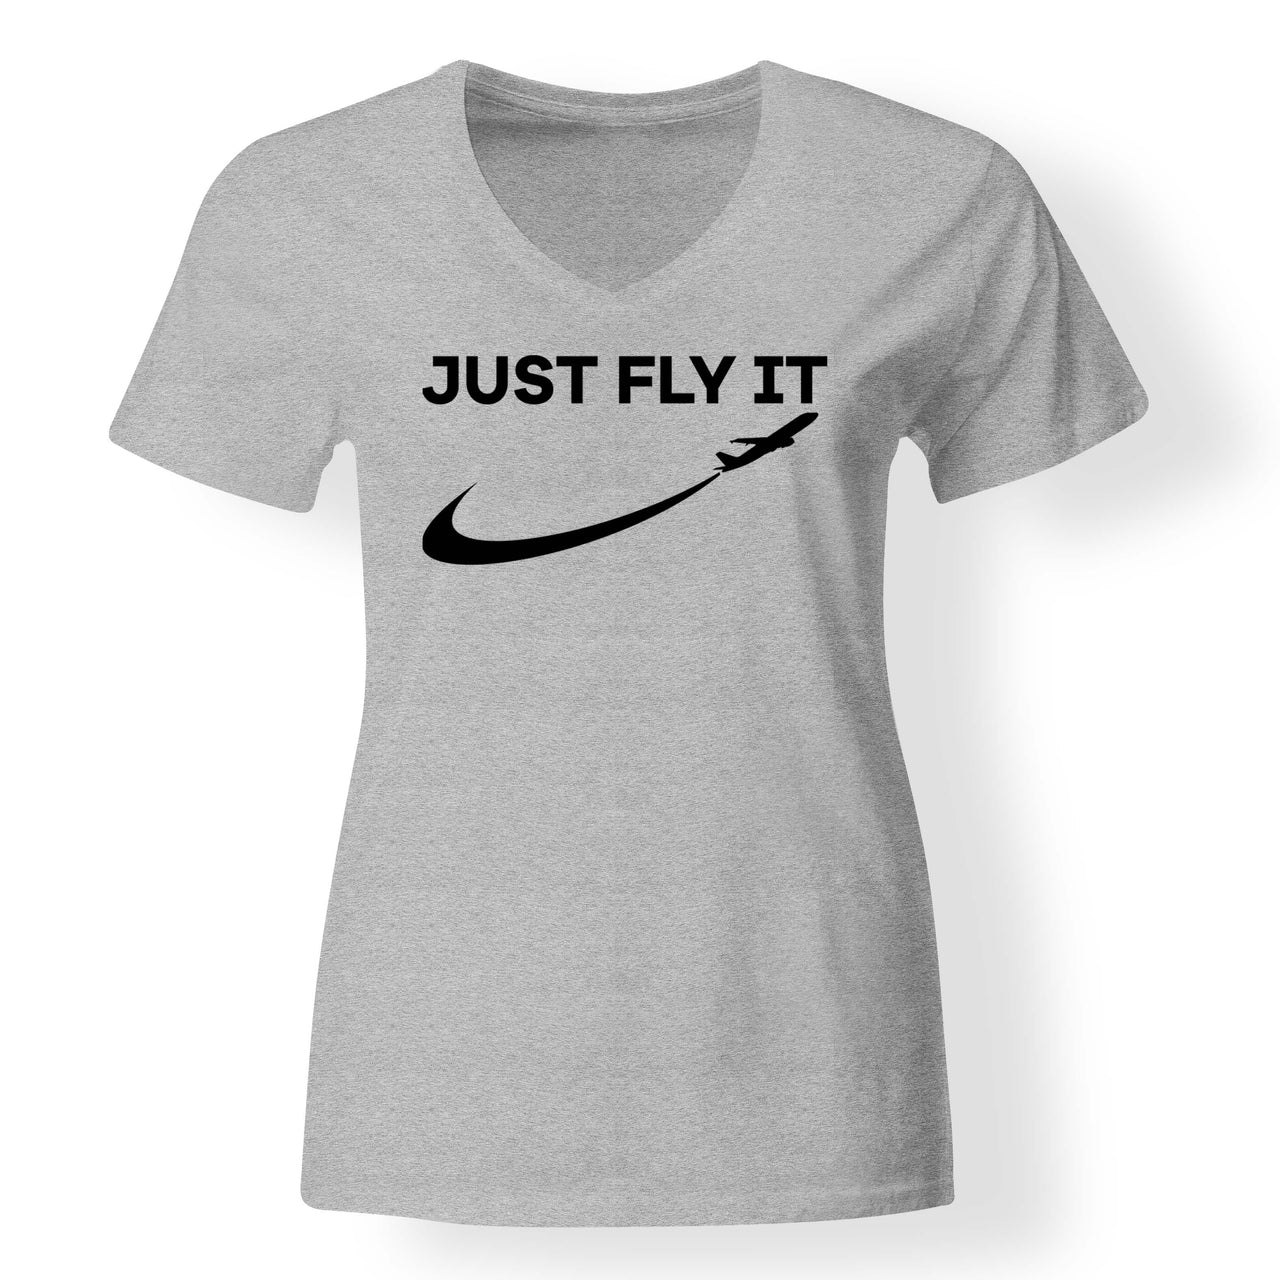 Just Fly It 2 Designed V-Neck T-Shirts